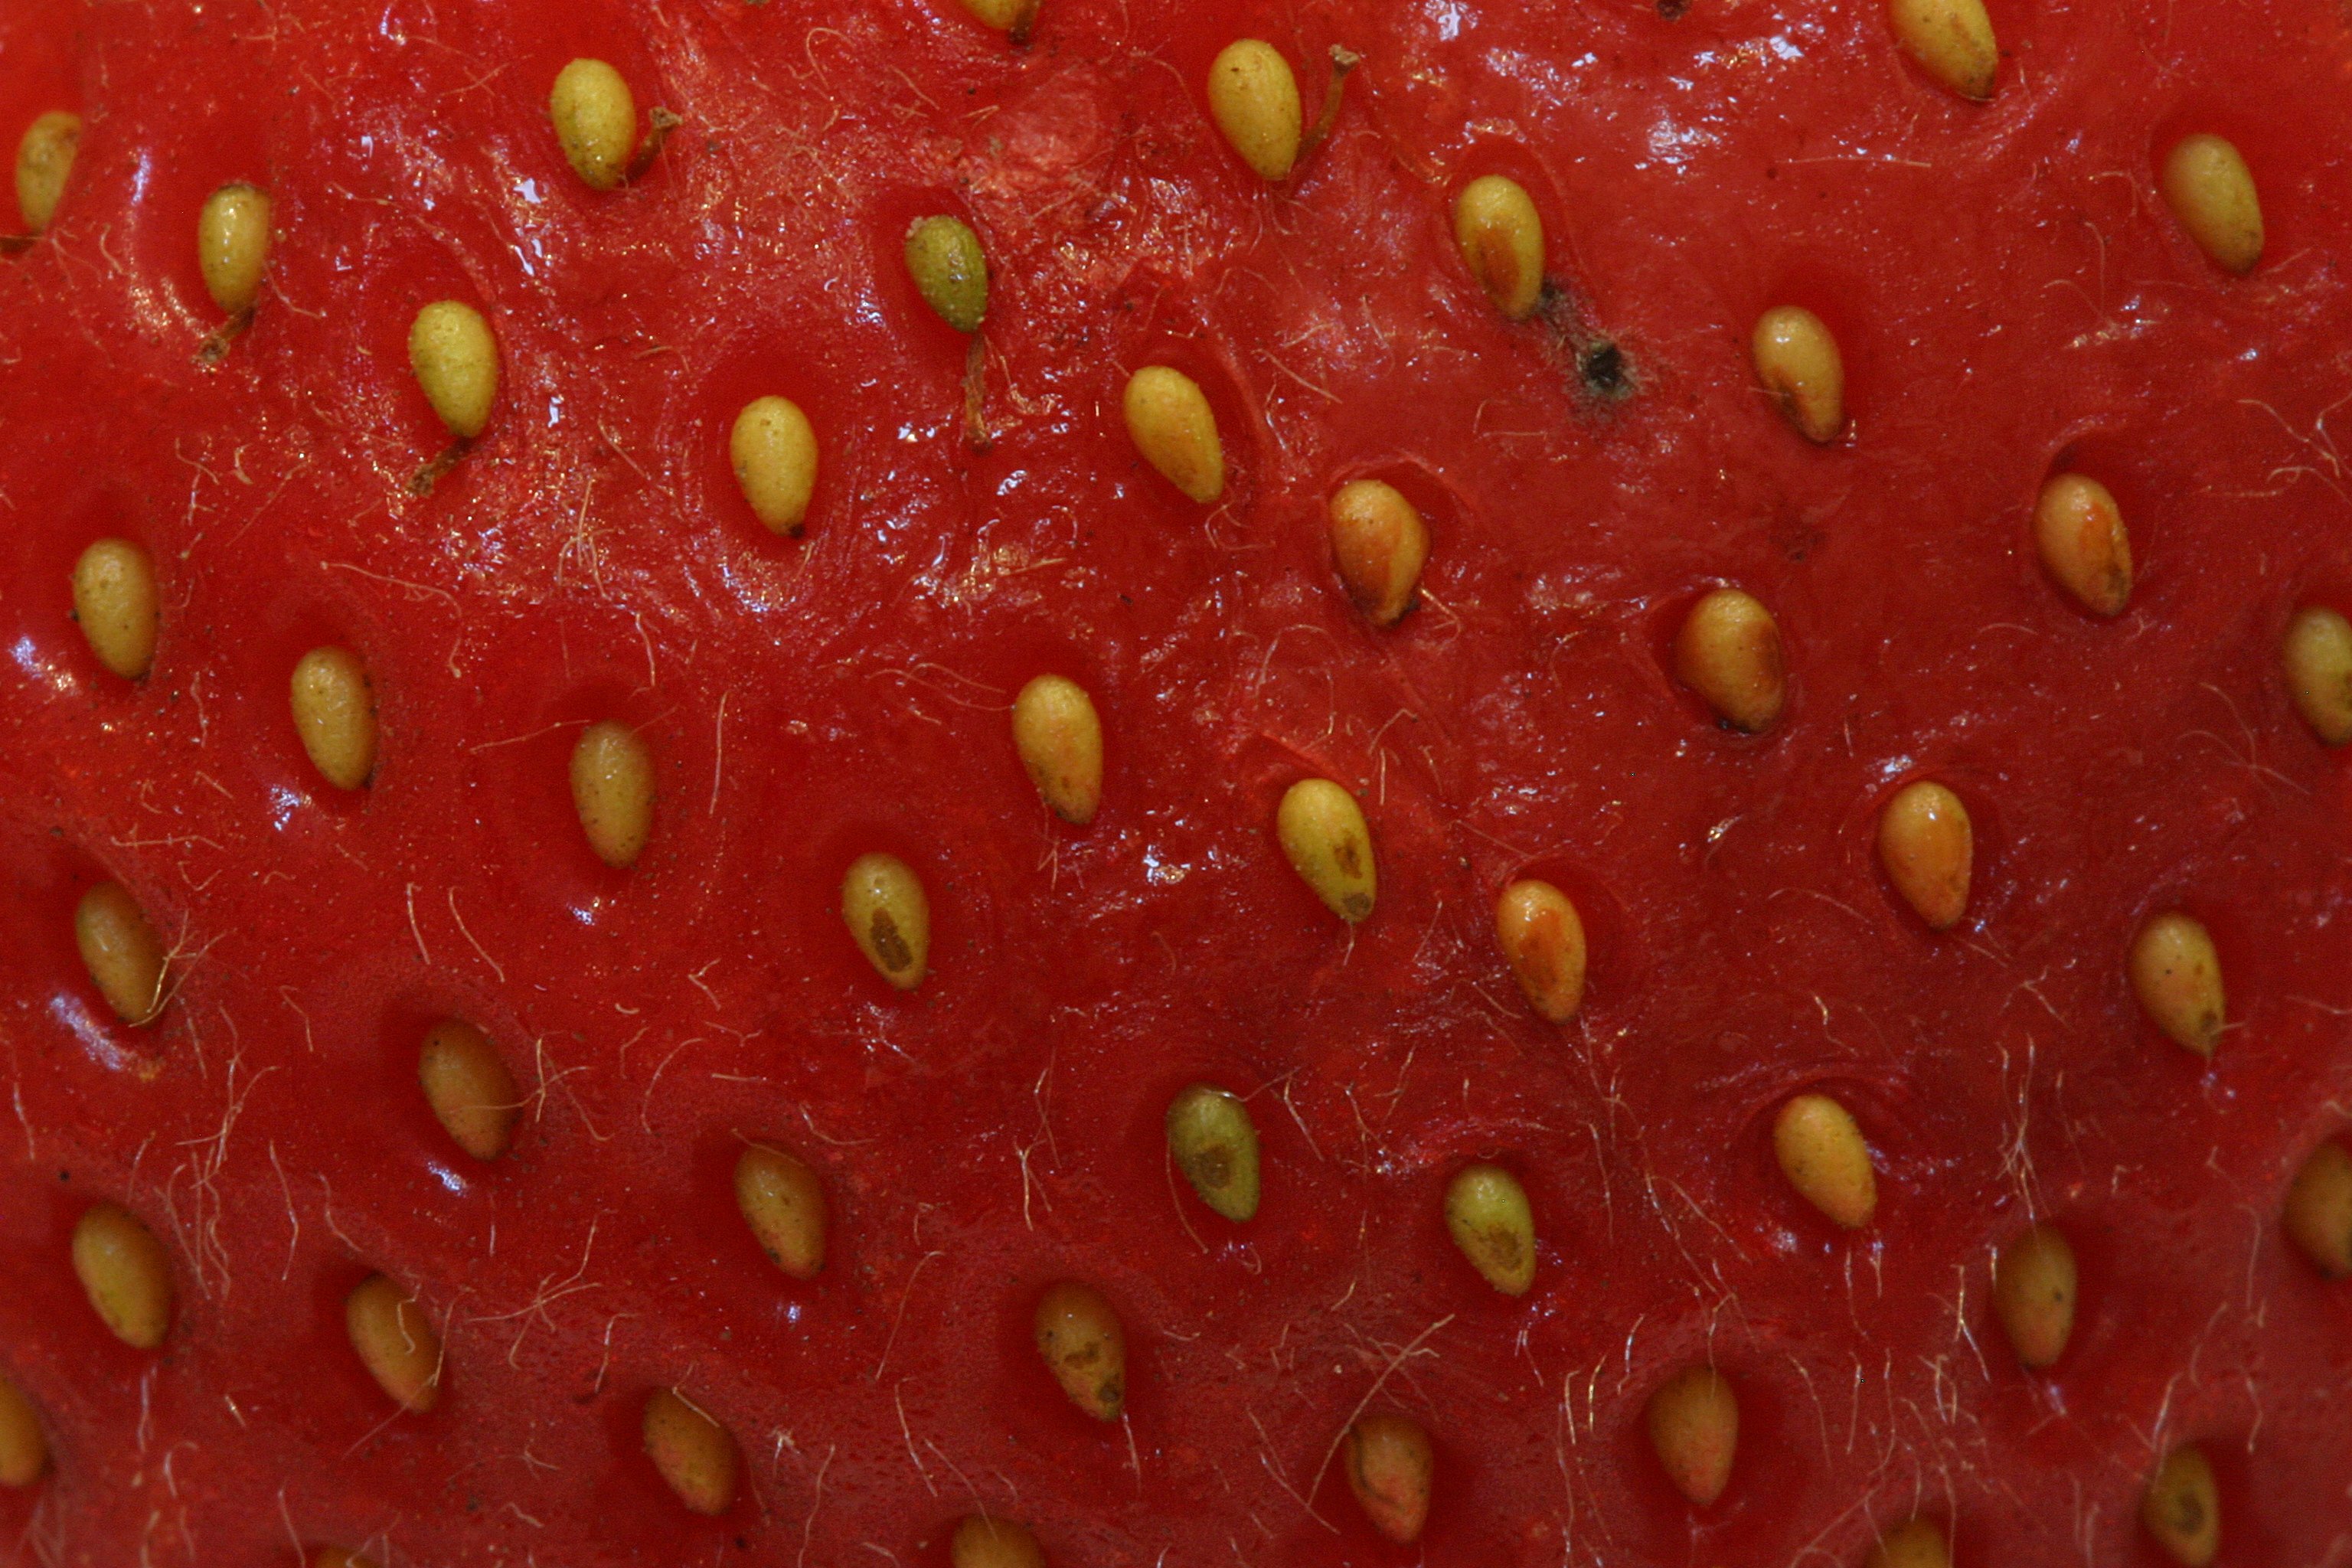 File:Strawberry surface closeup.jpg - Wikimedia Commons